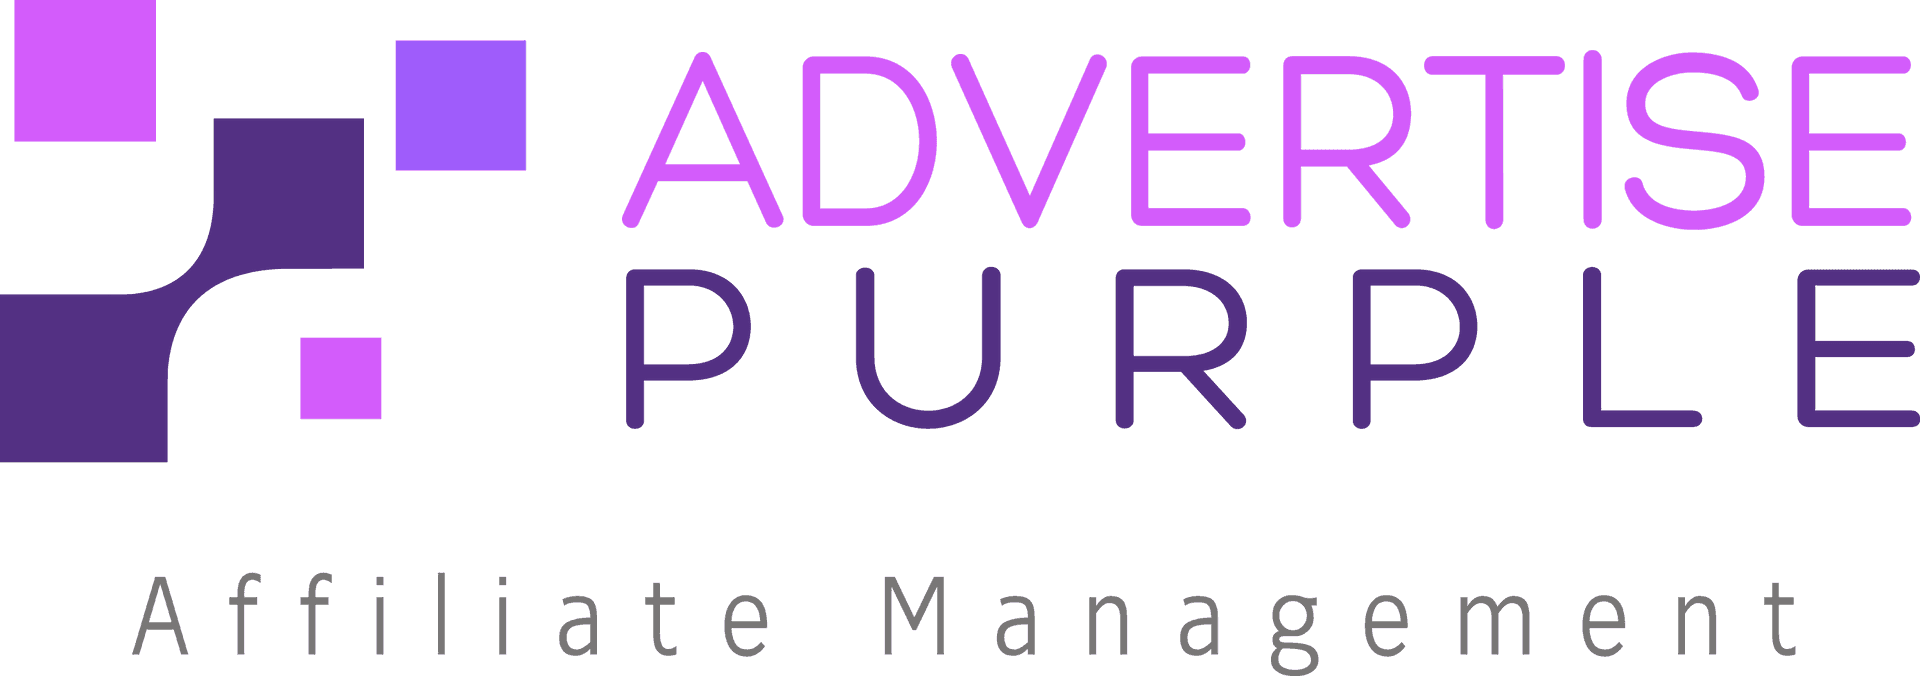 Advertise Purple Affiliate Management Logo PNG image